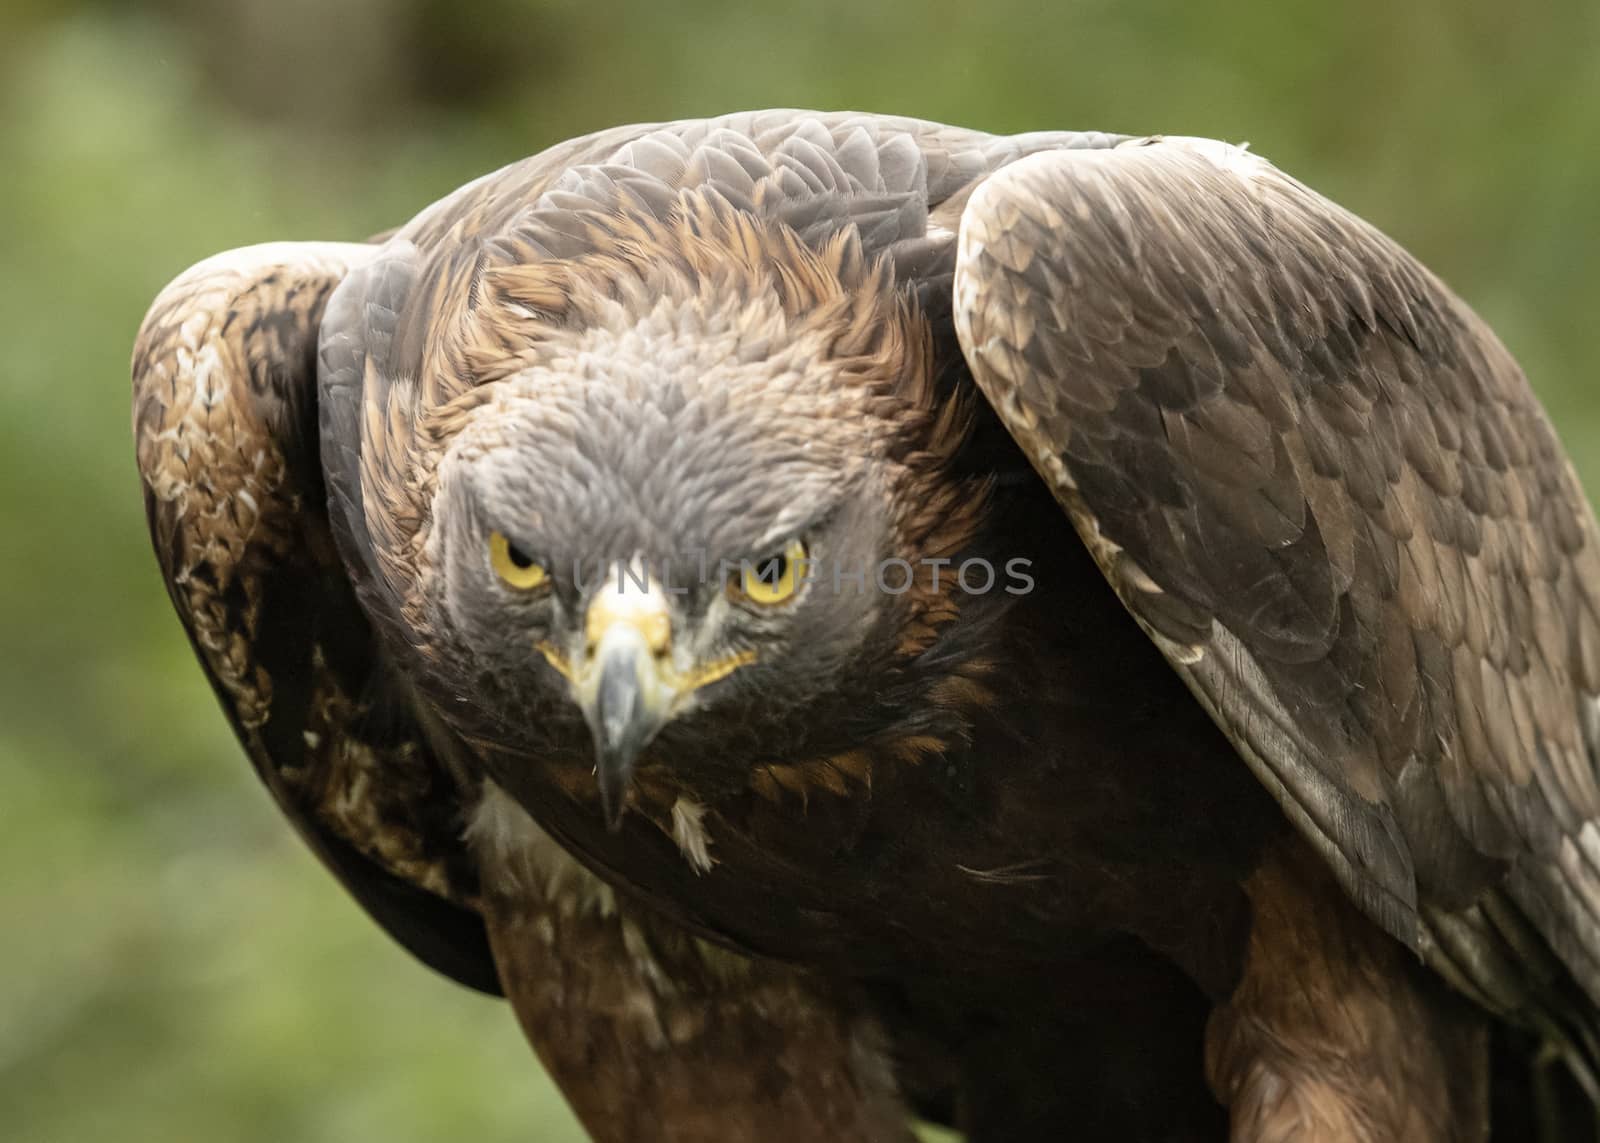 UK, Sherwood Forrest, Nottinghamshire Birds of Prey Event - October 2018: This Golden Eagle in part of a breeding & conservation program in the UK